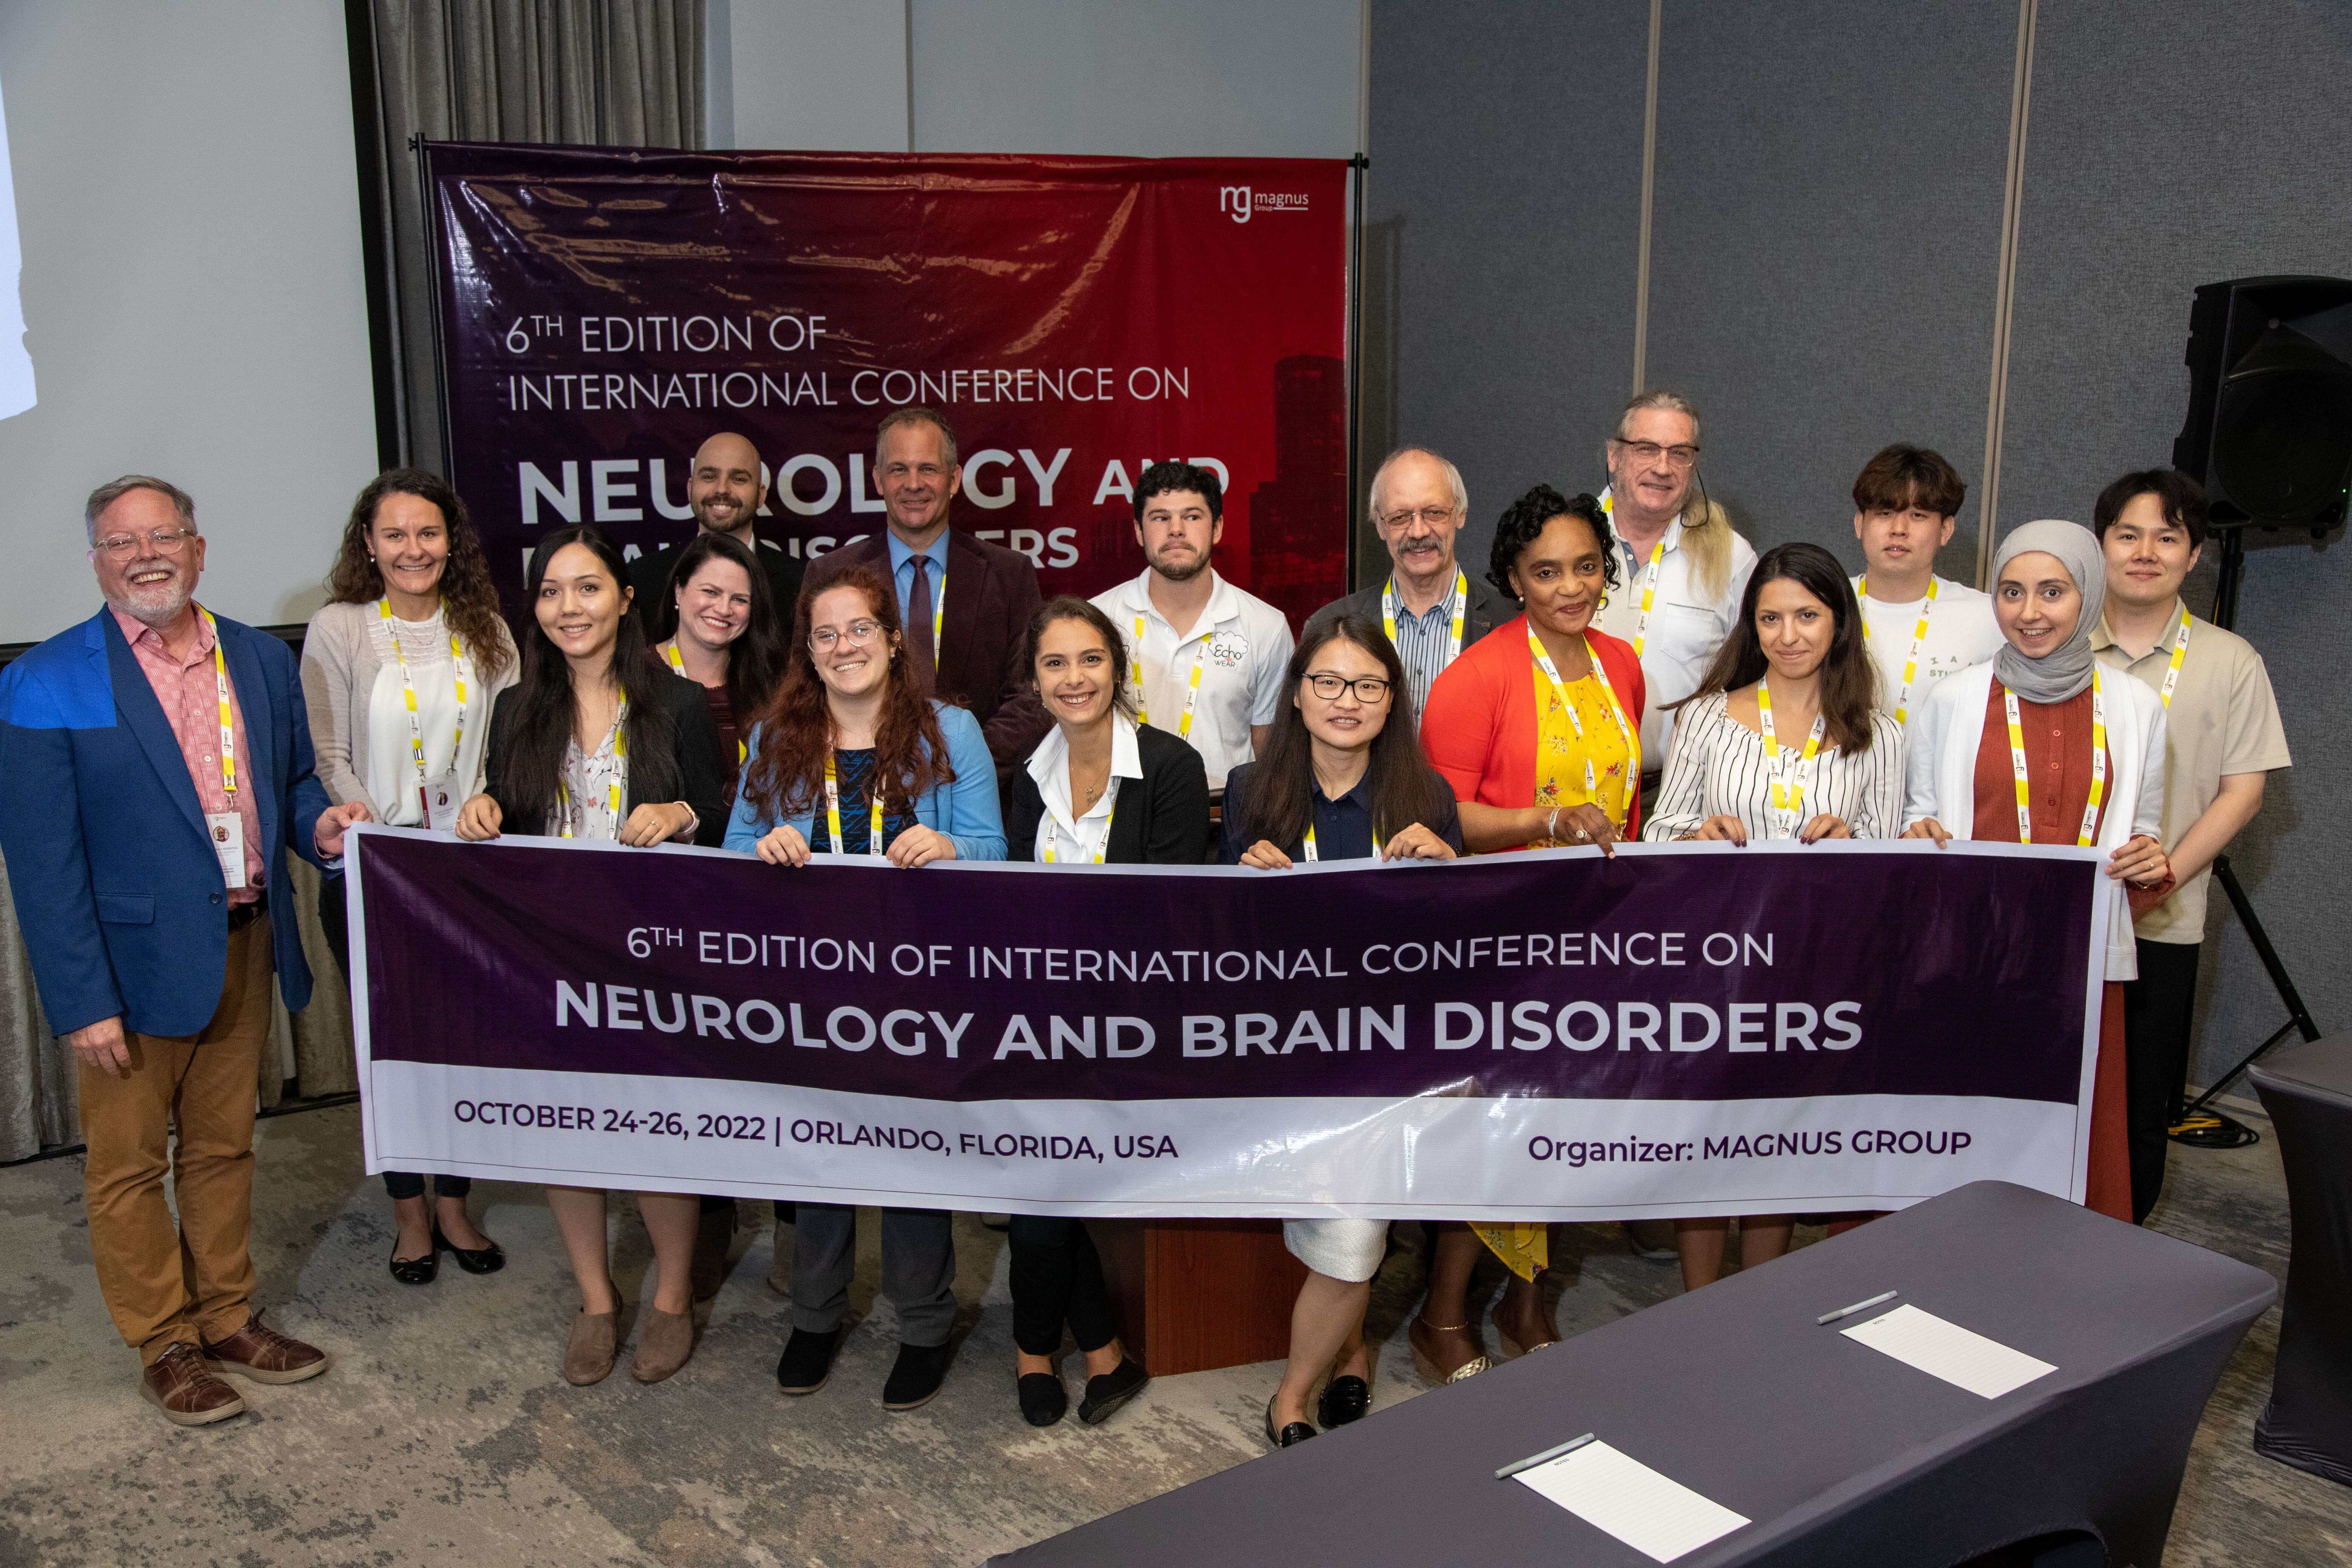 Neurology Conference